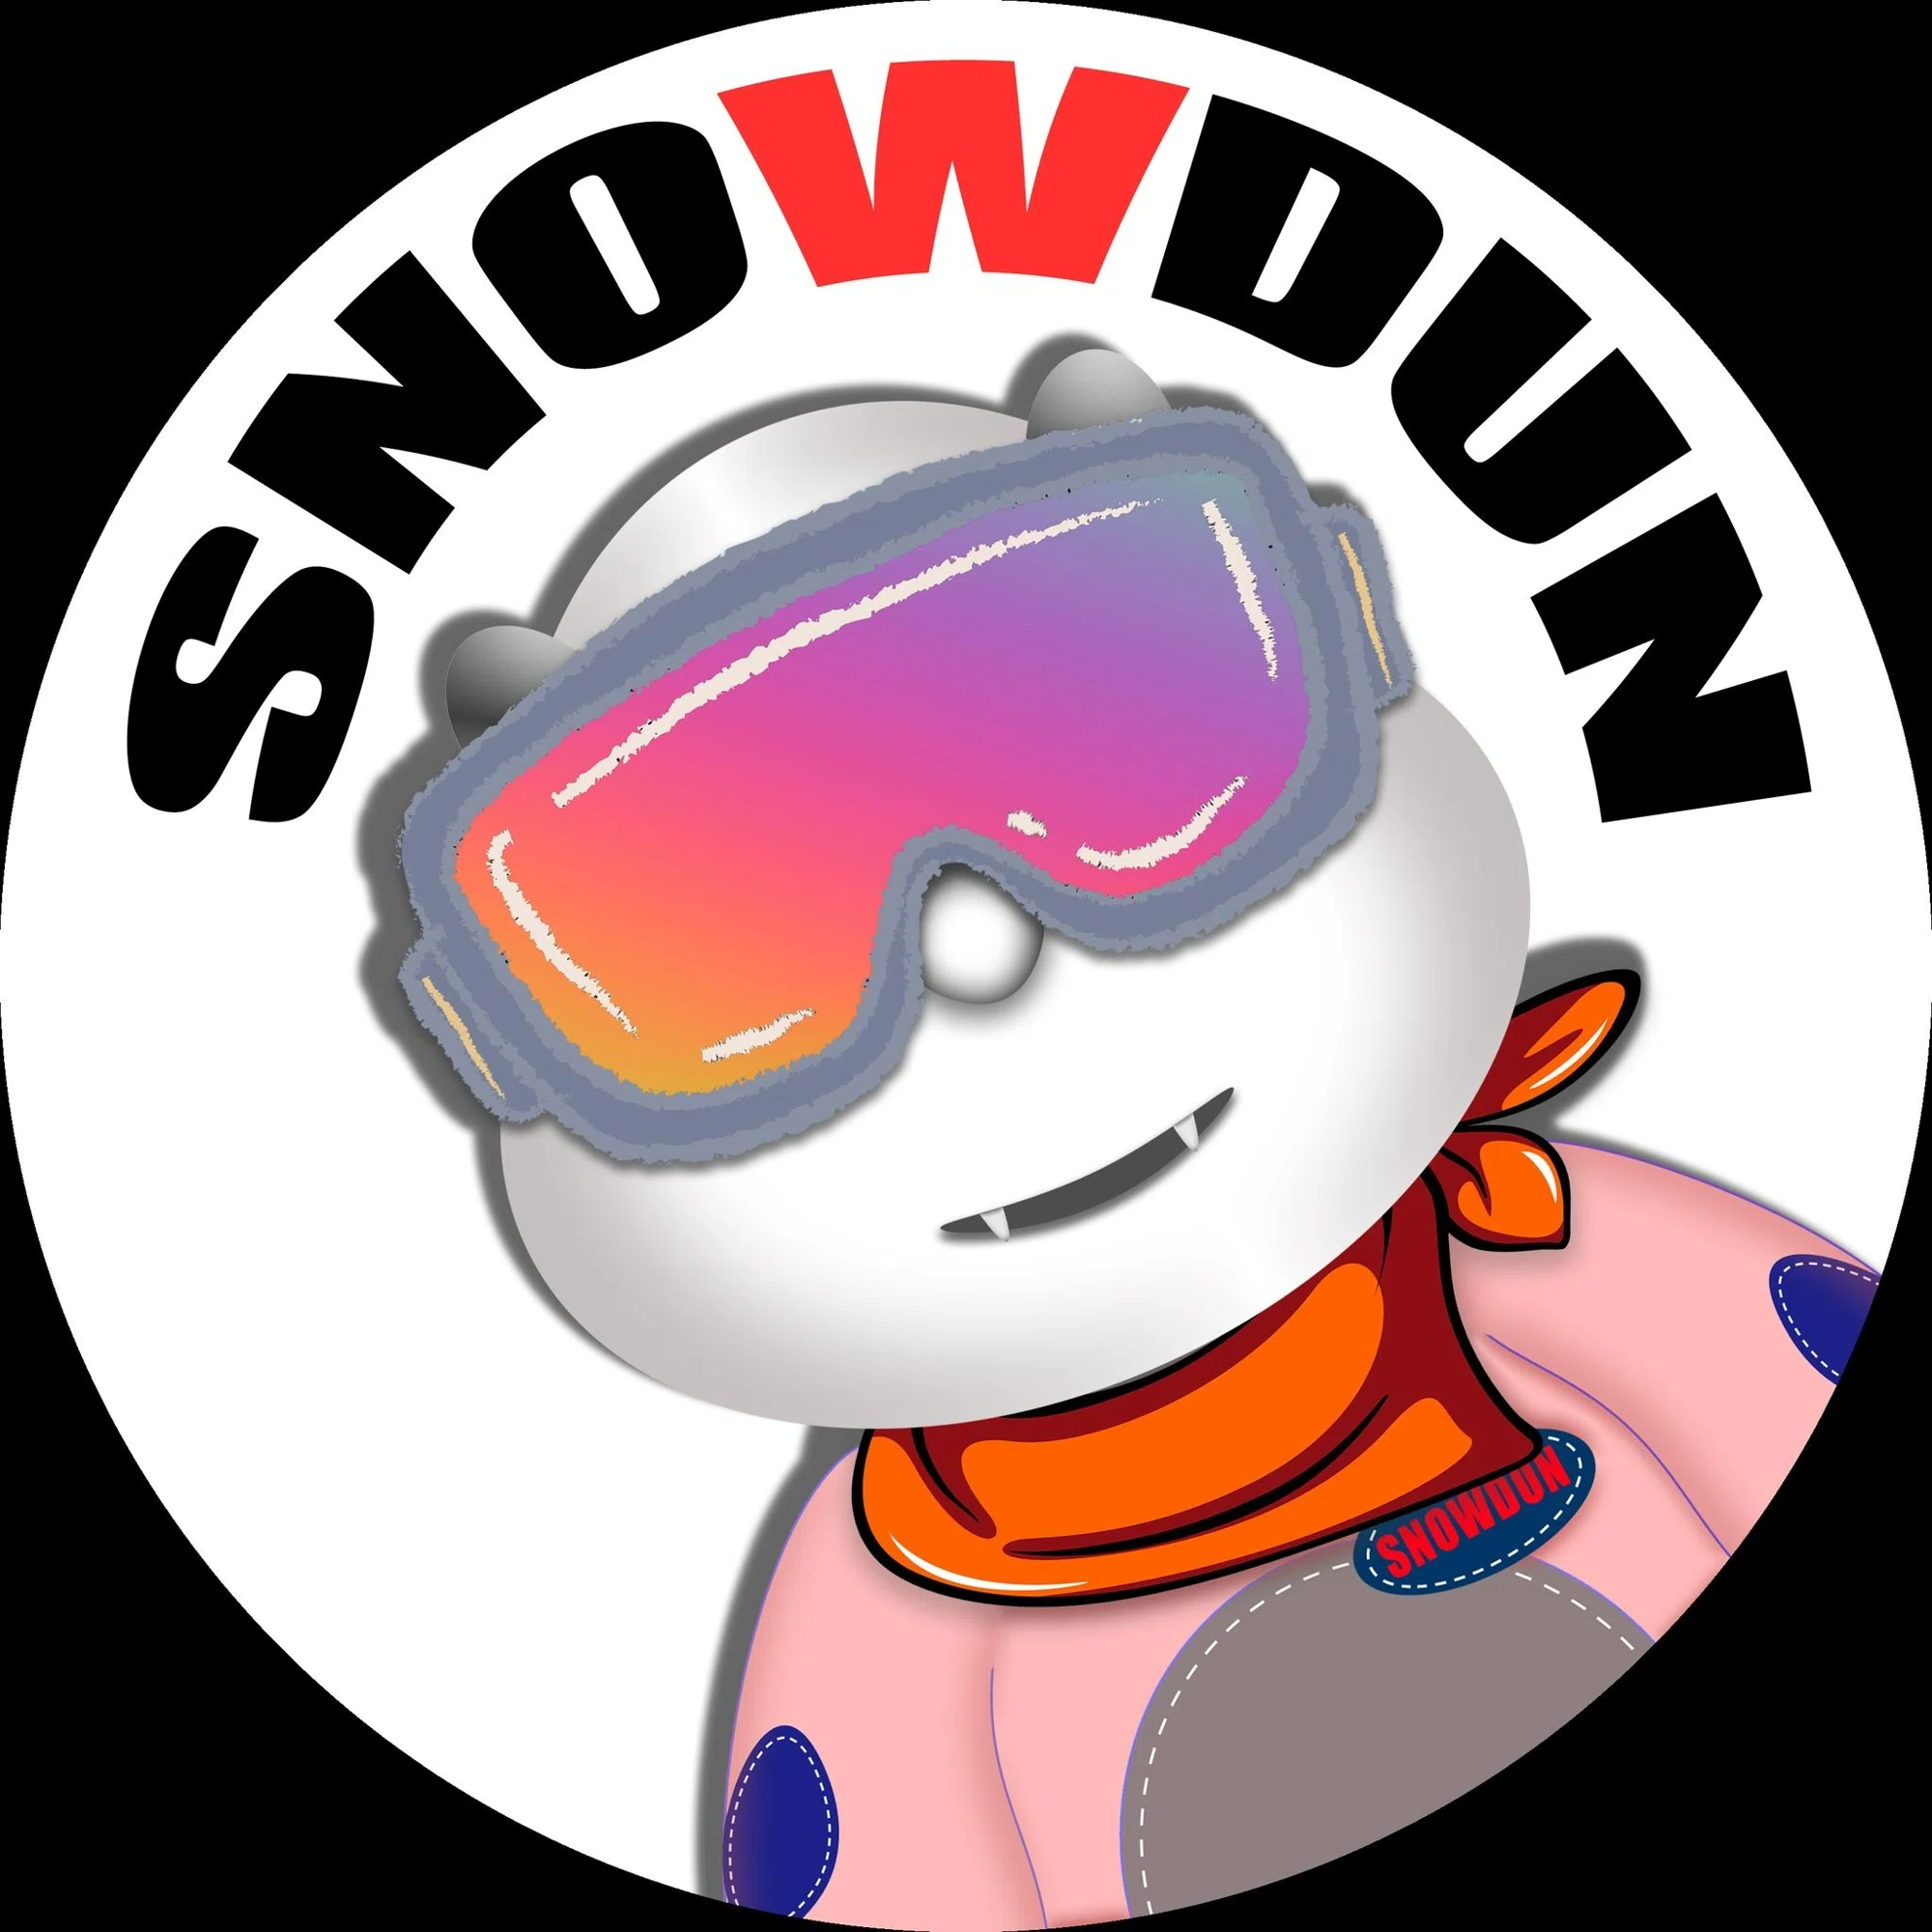 Snowdun